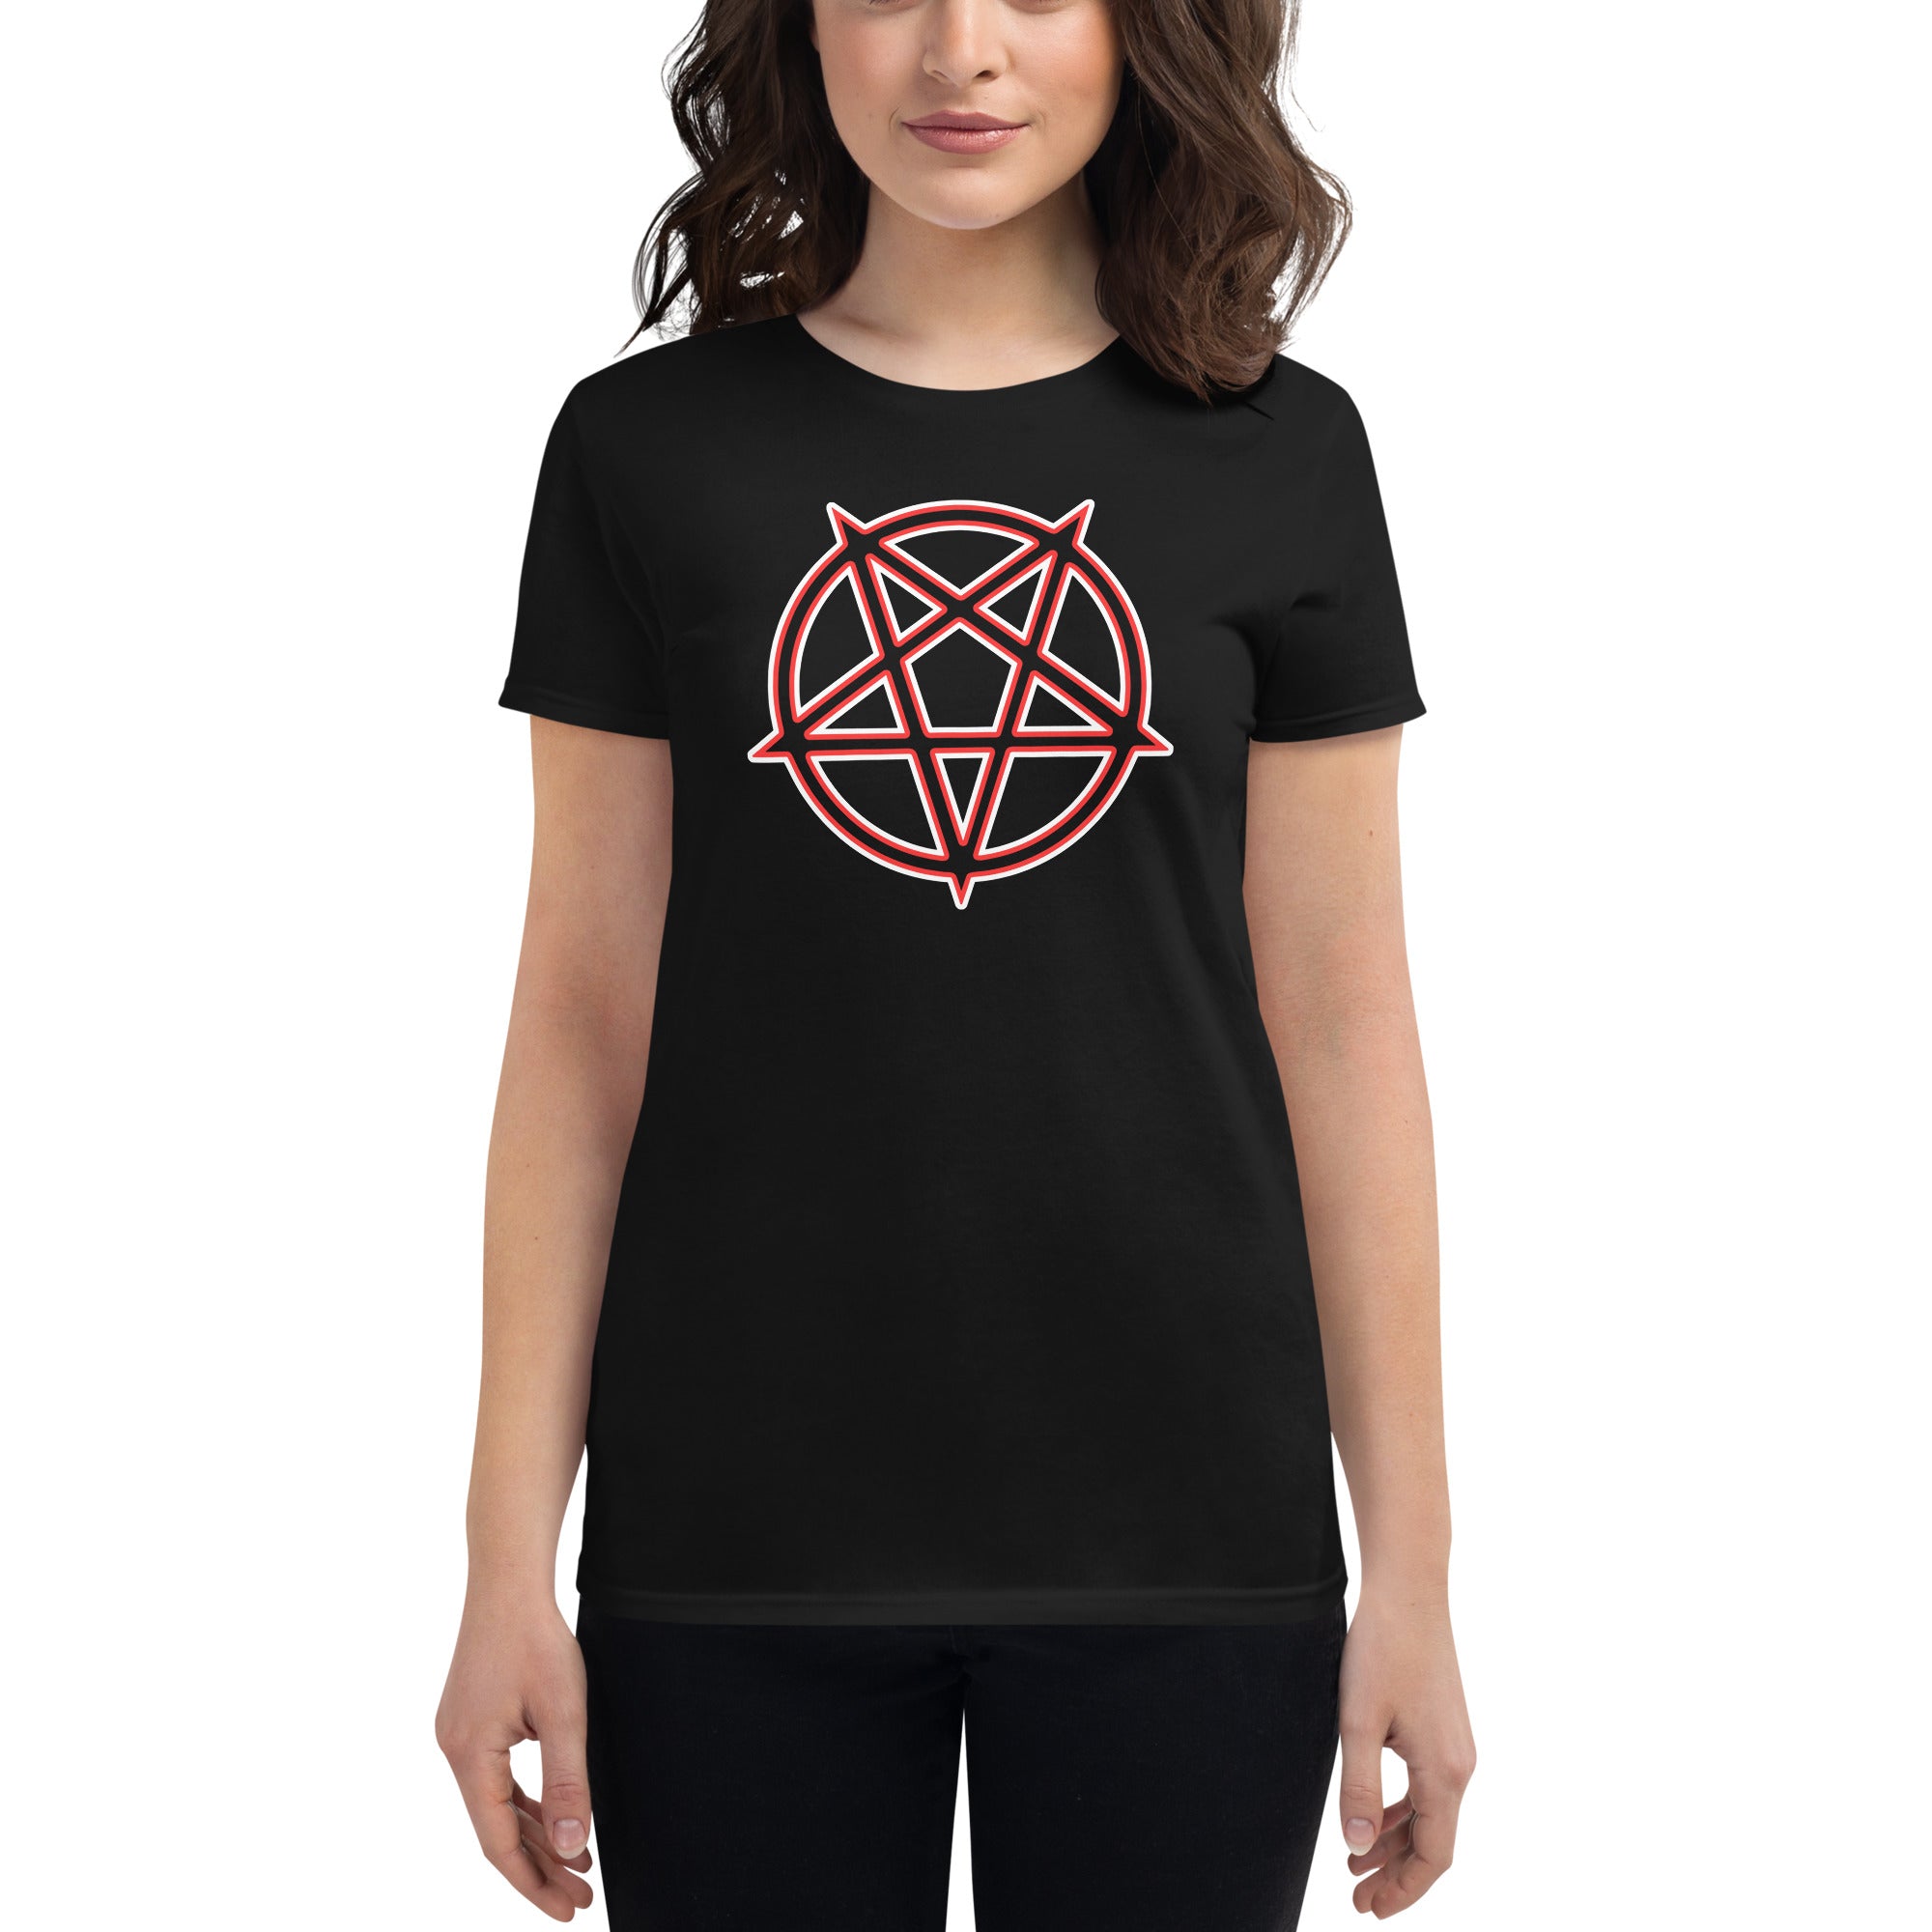 Satanic Occult Symbol The Inverted Pentagram Women's Short Sleeve Babydoll T-shirt